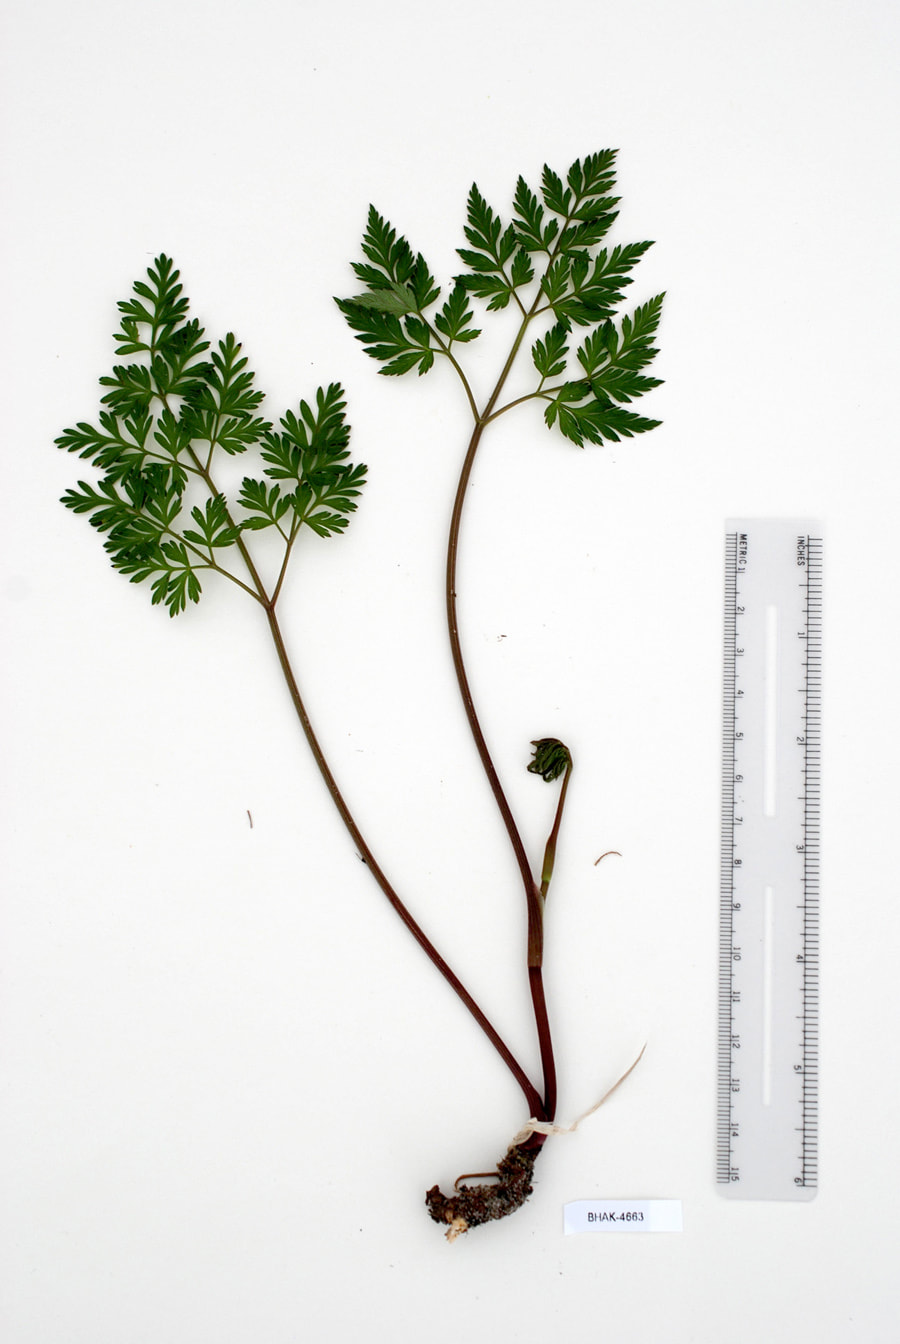 Pacific hemlock parsley, Conioselinum GmeliniiPicture